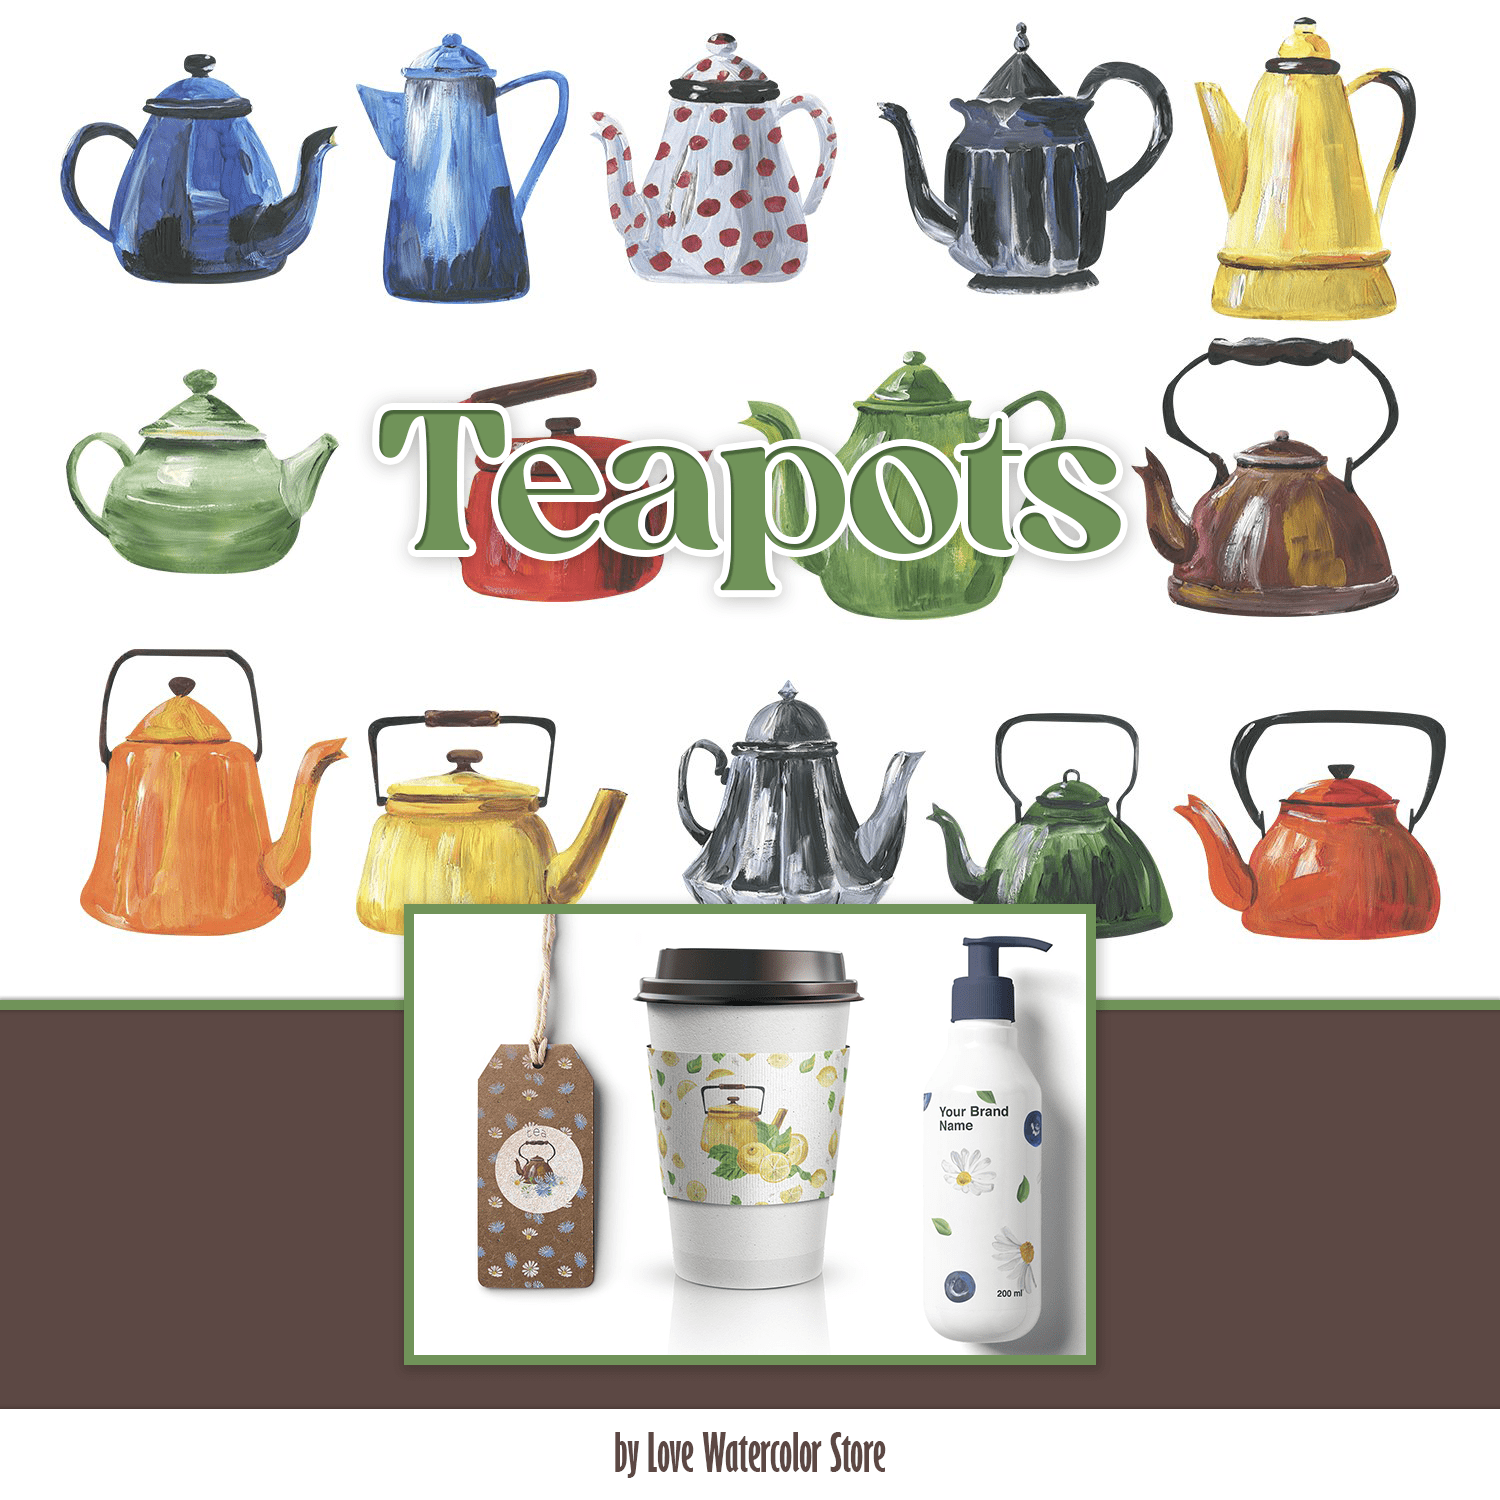 Teapots cover.